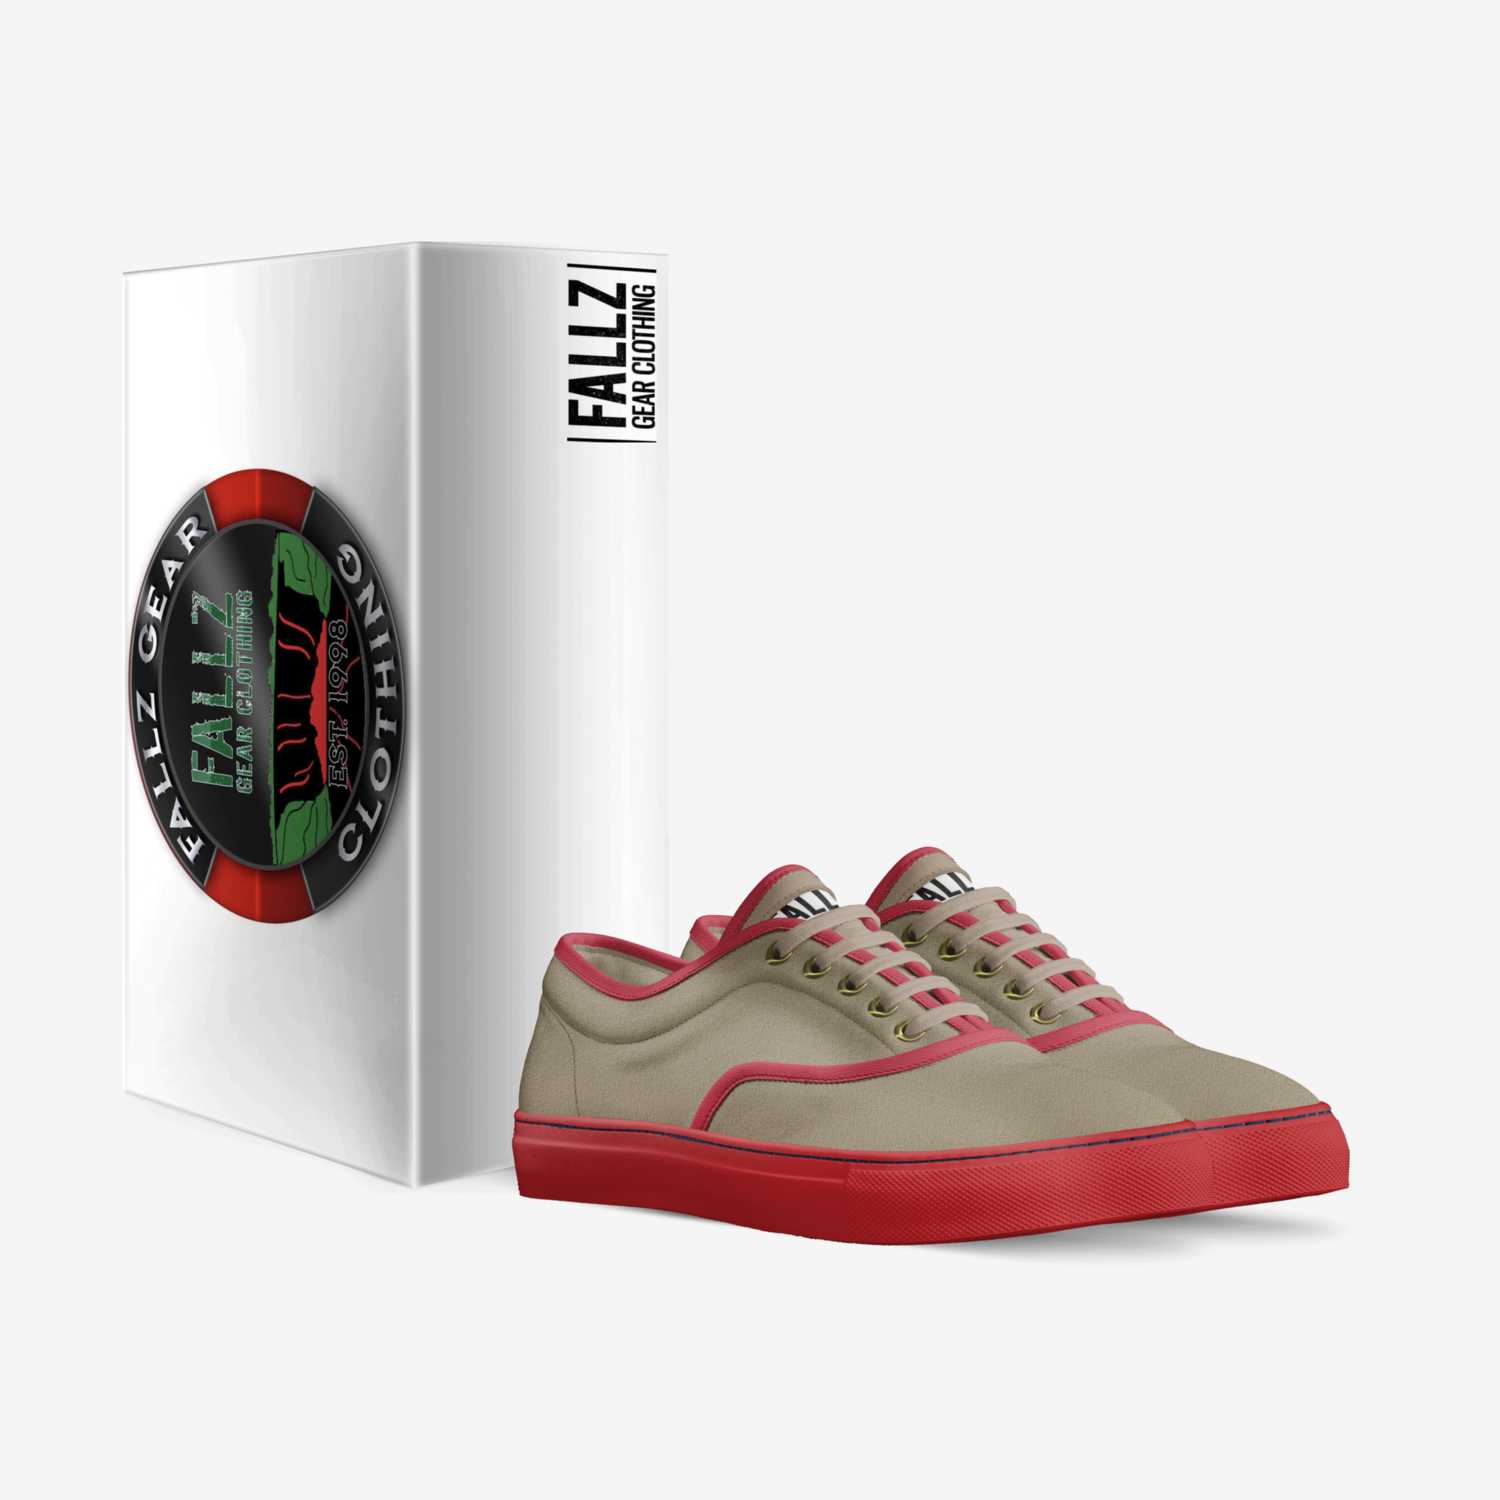 Fallz Gear: Deck custom made in Italy shoes by Fallz Gear | Box view